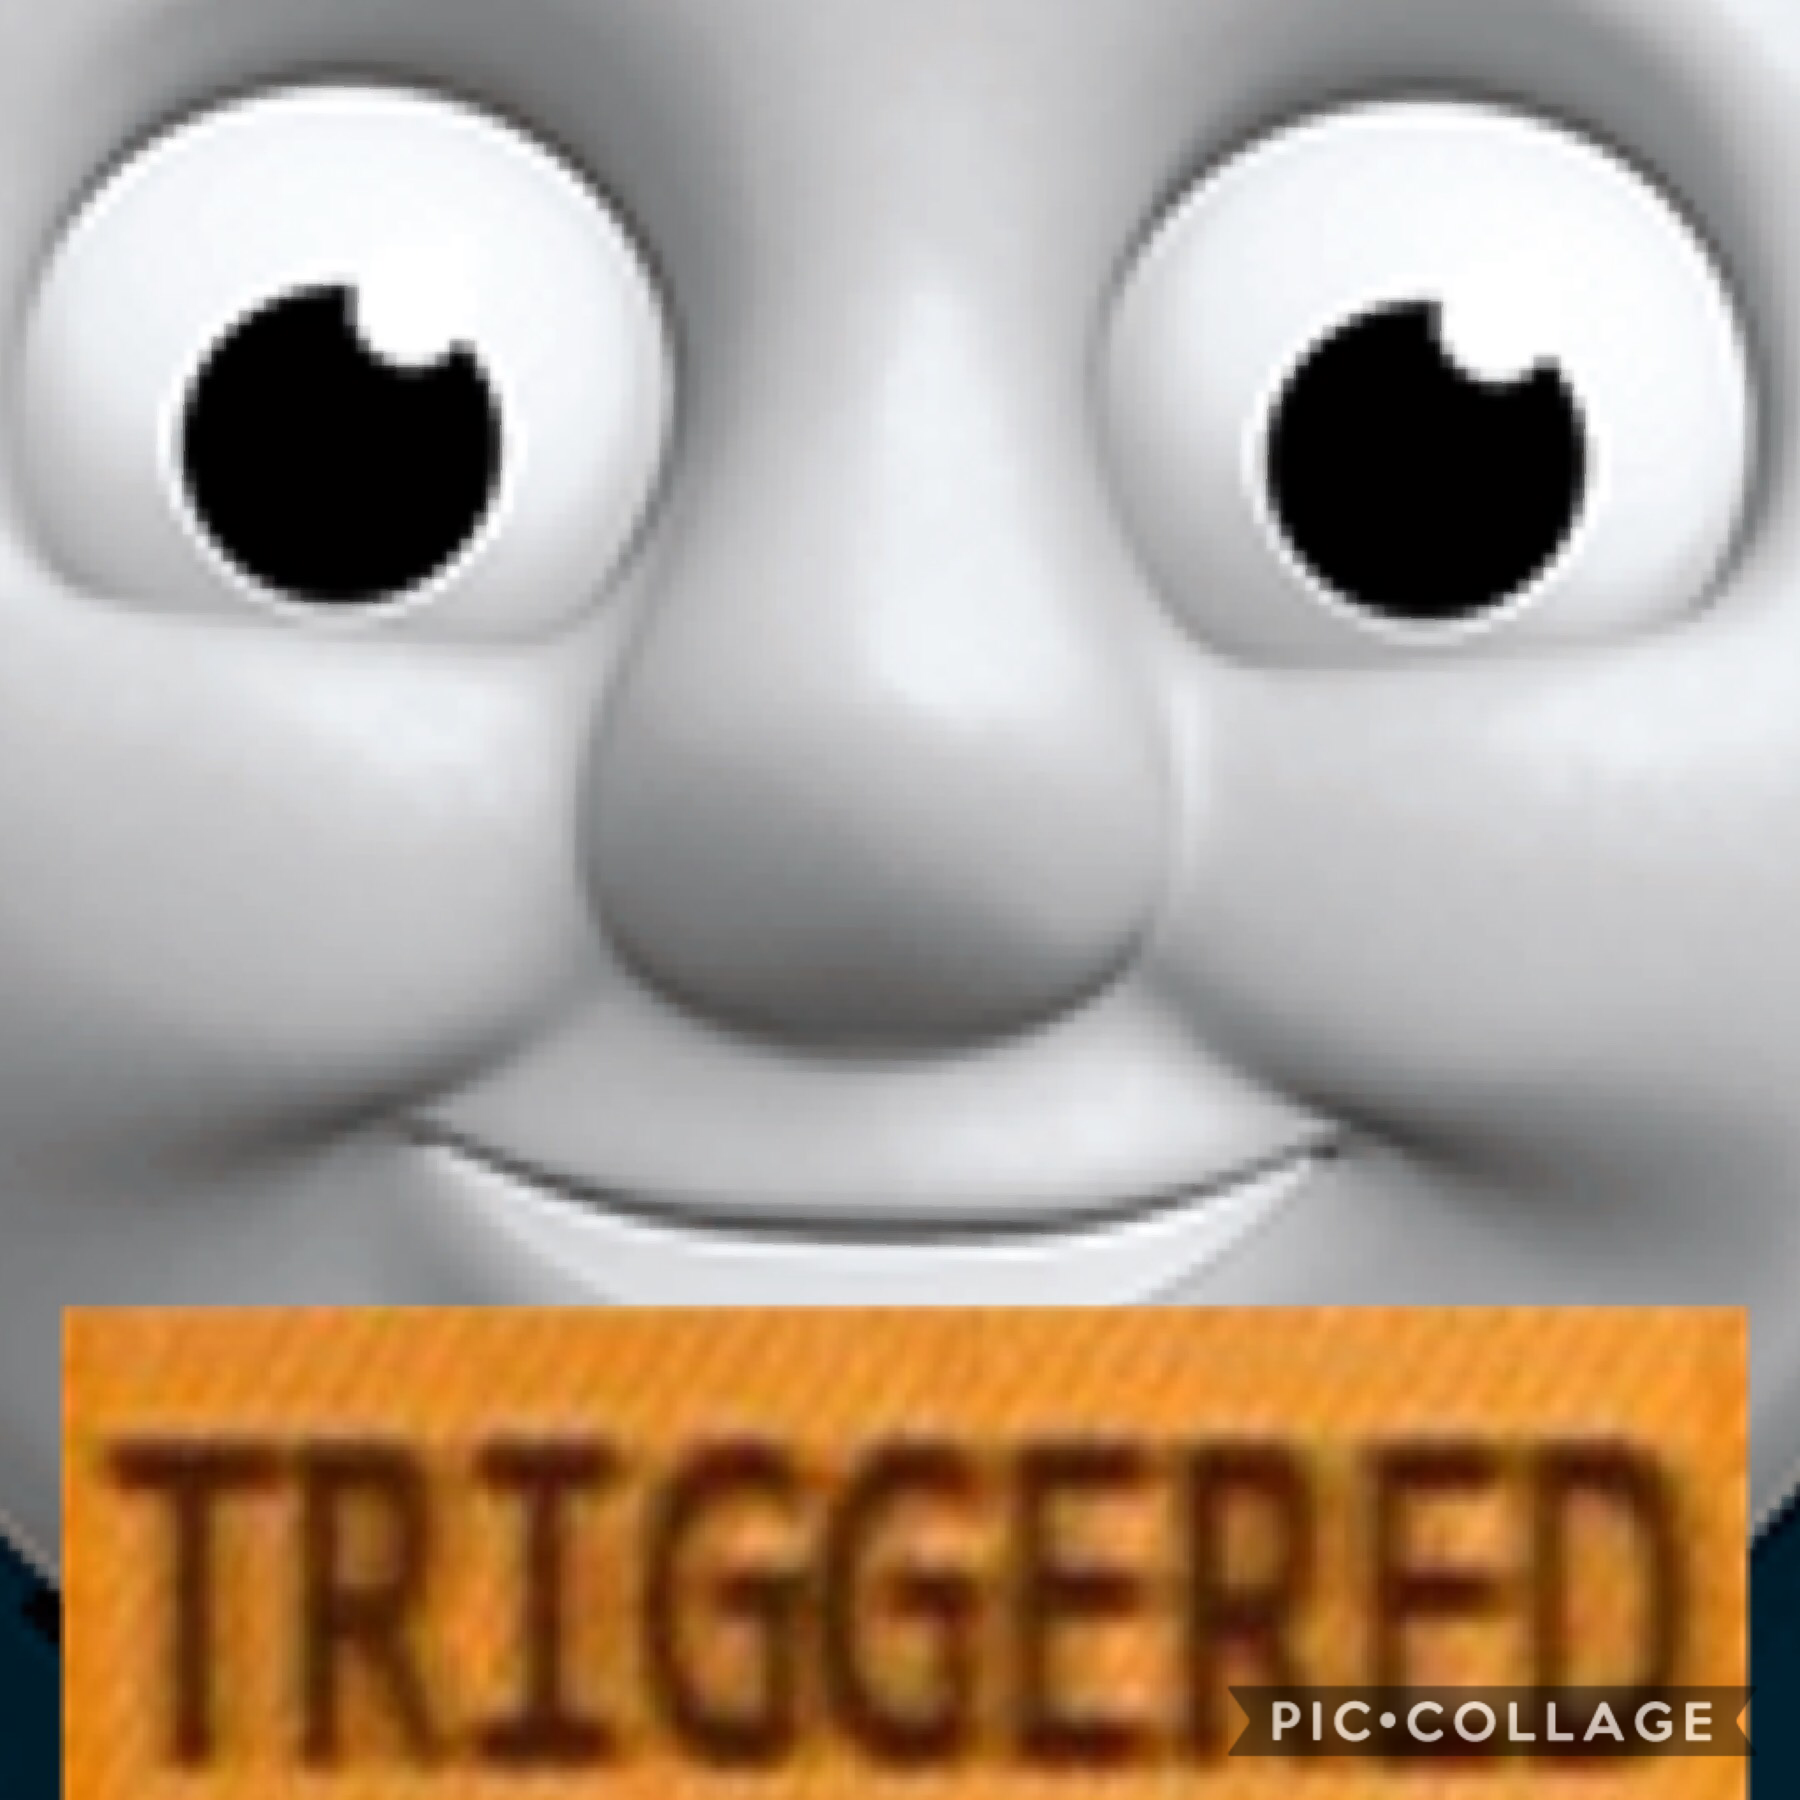 Triggered Thomas the tank engine 